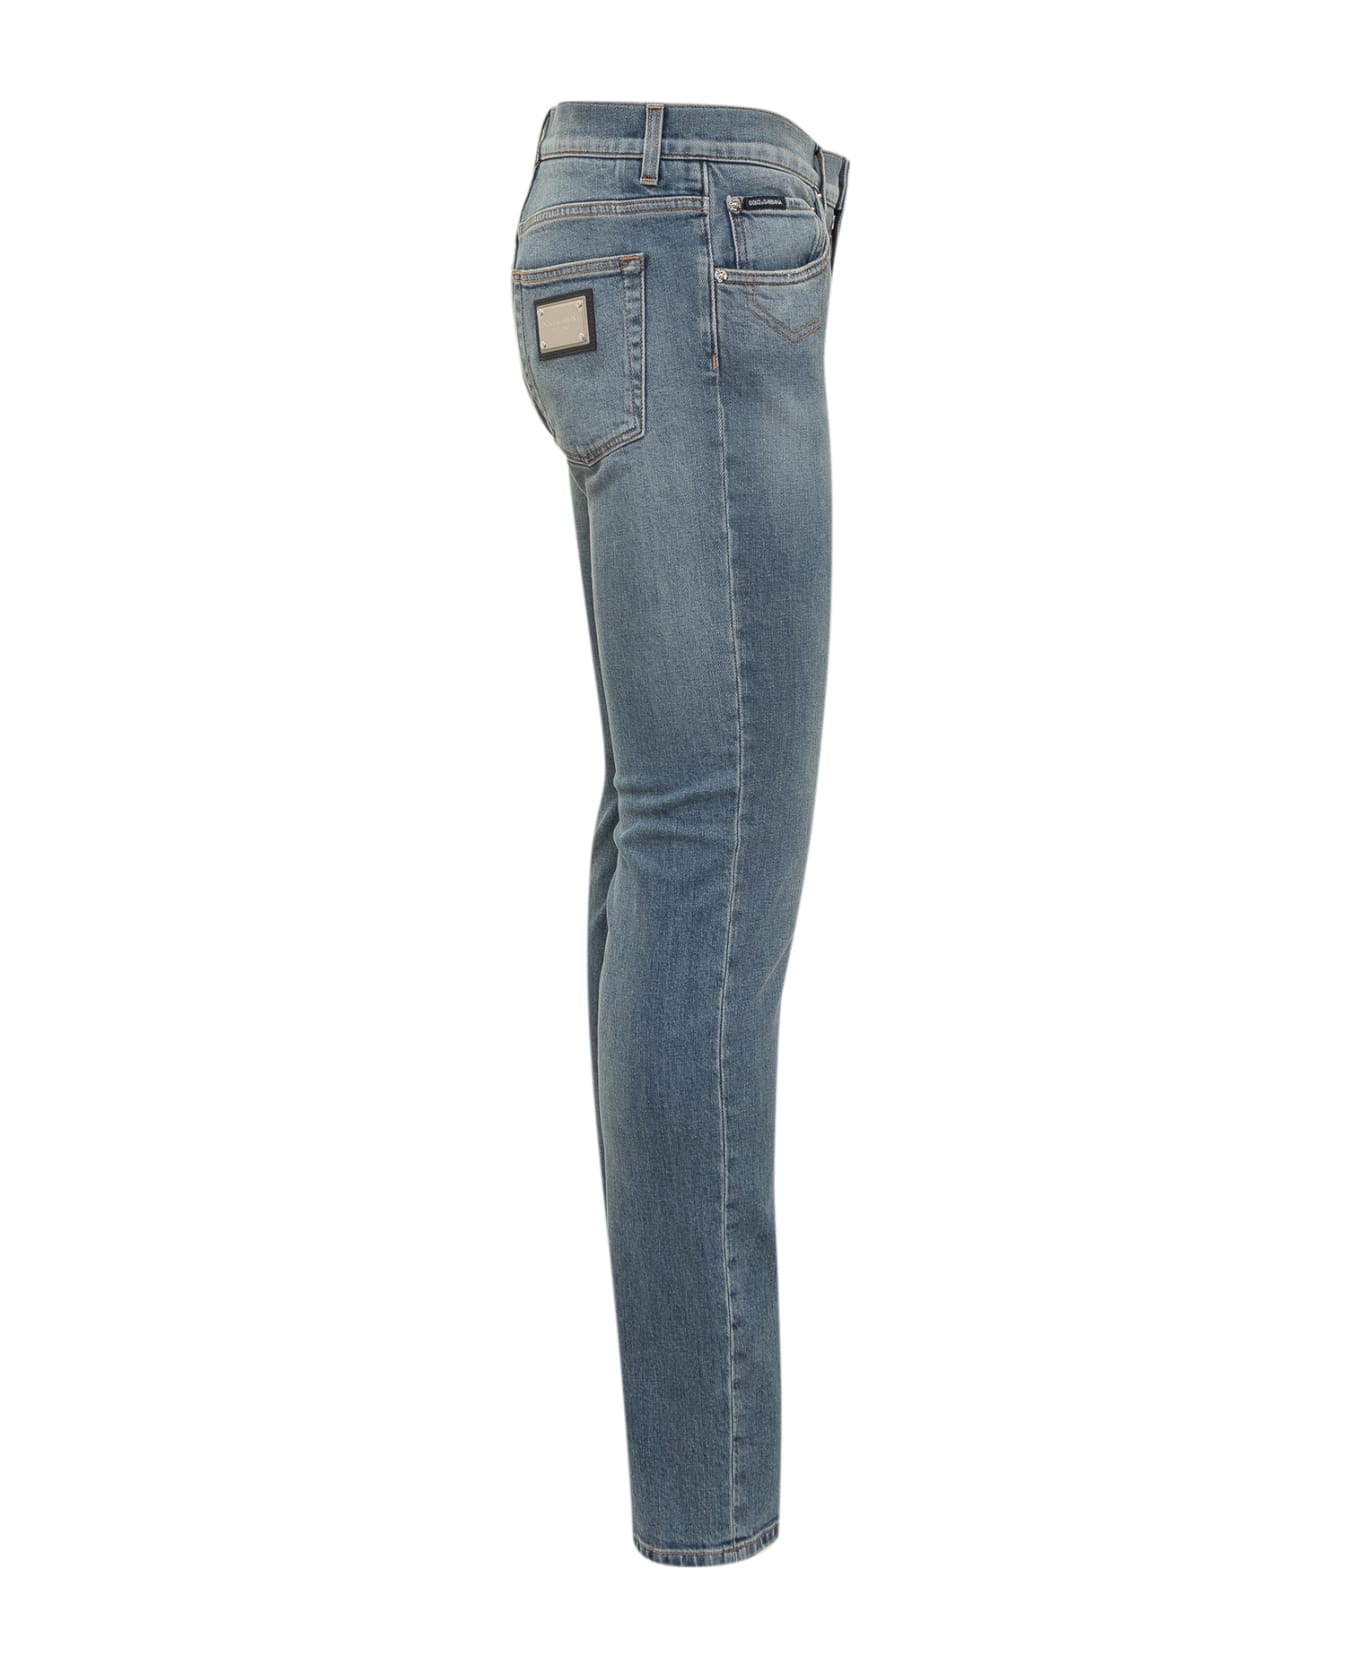 Dolce & Gabbana Jeans With Logo - Variante Abbinata